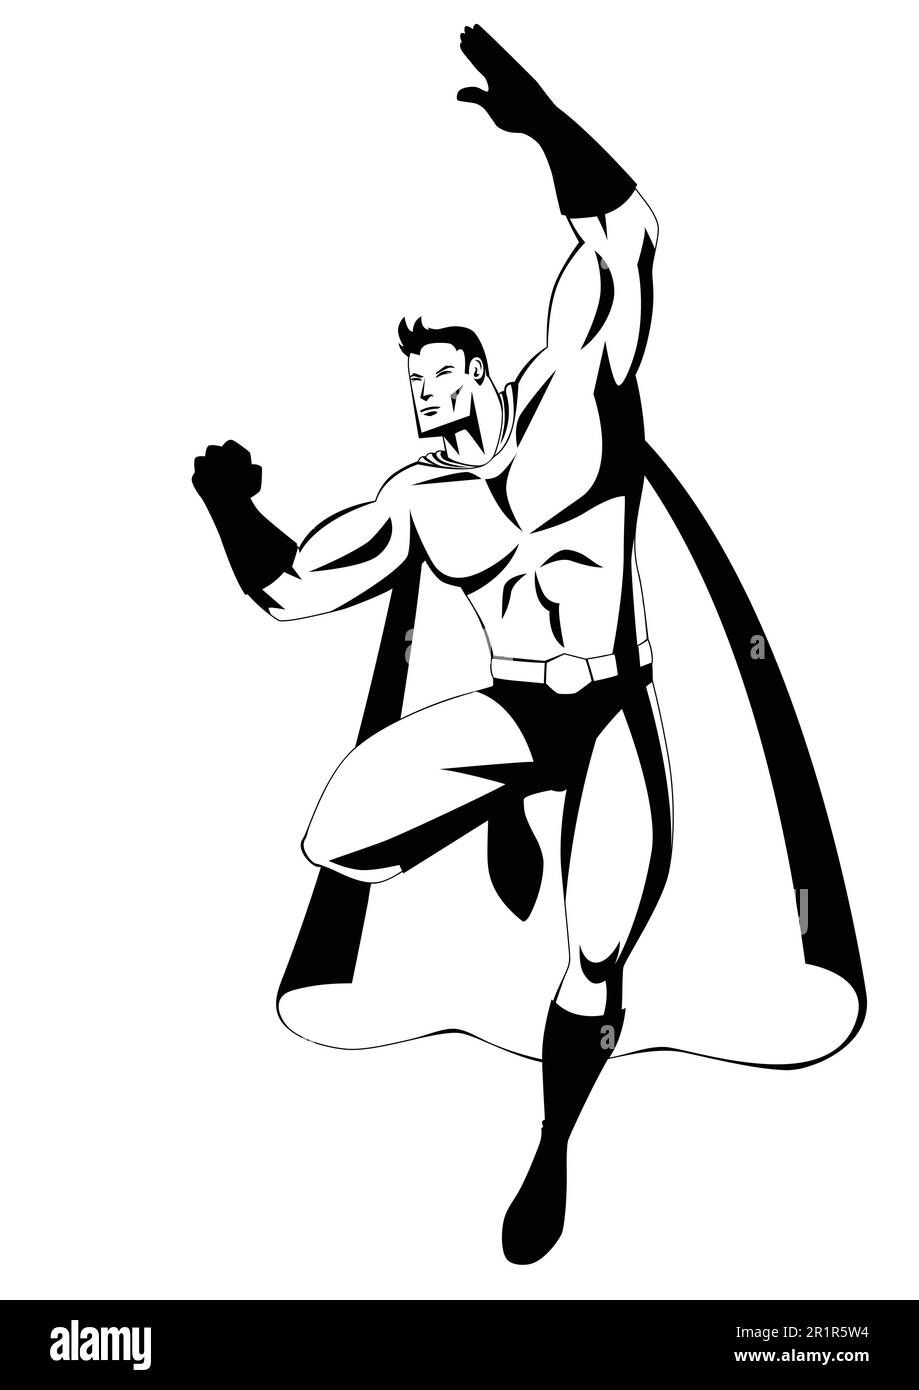 Superhero in flying pose in black and white illustration Stock Vector